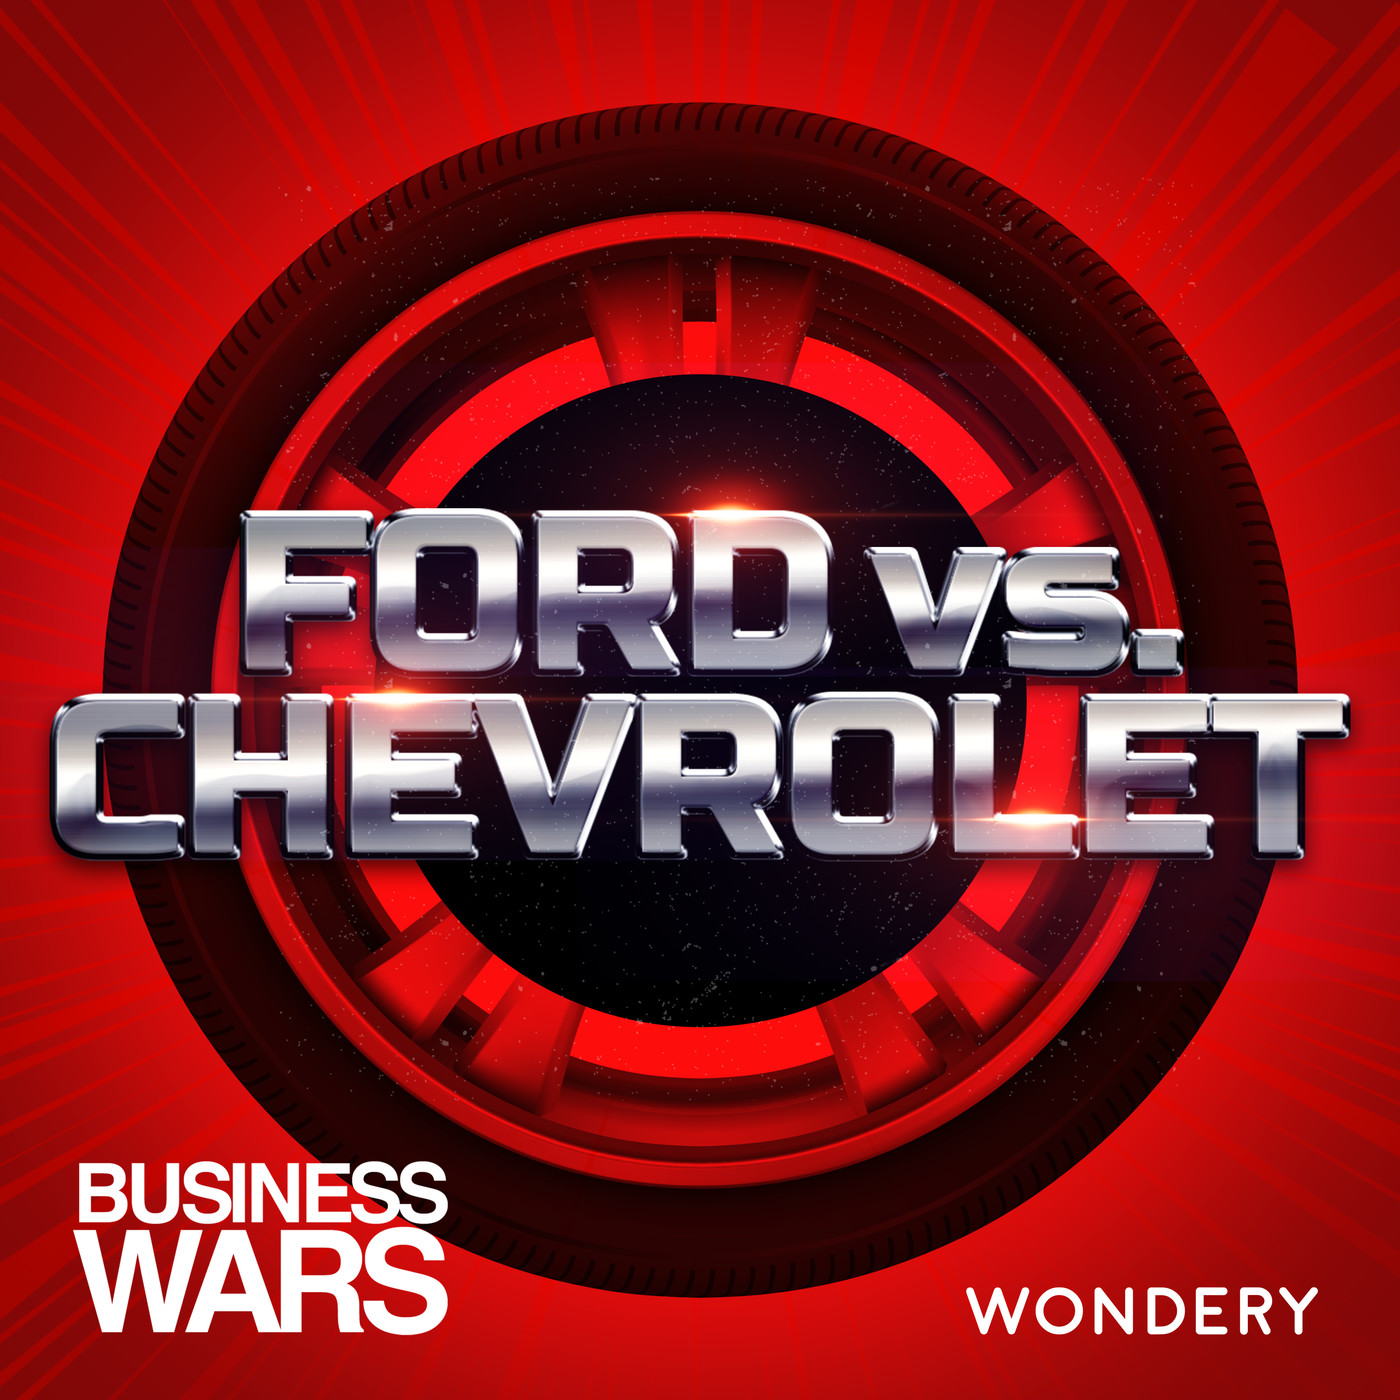 ford vs chevy logos